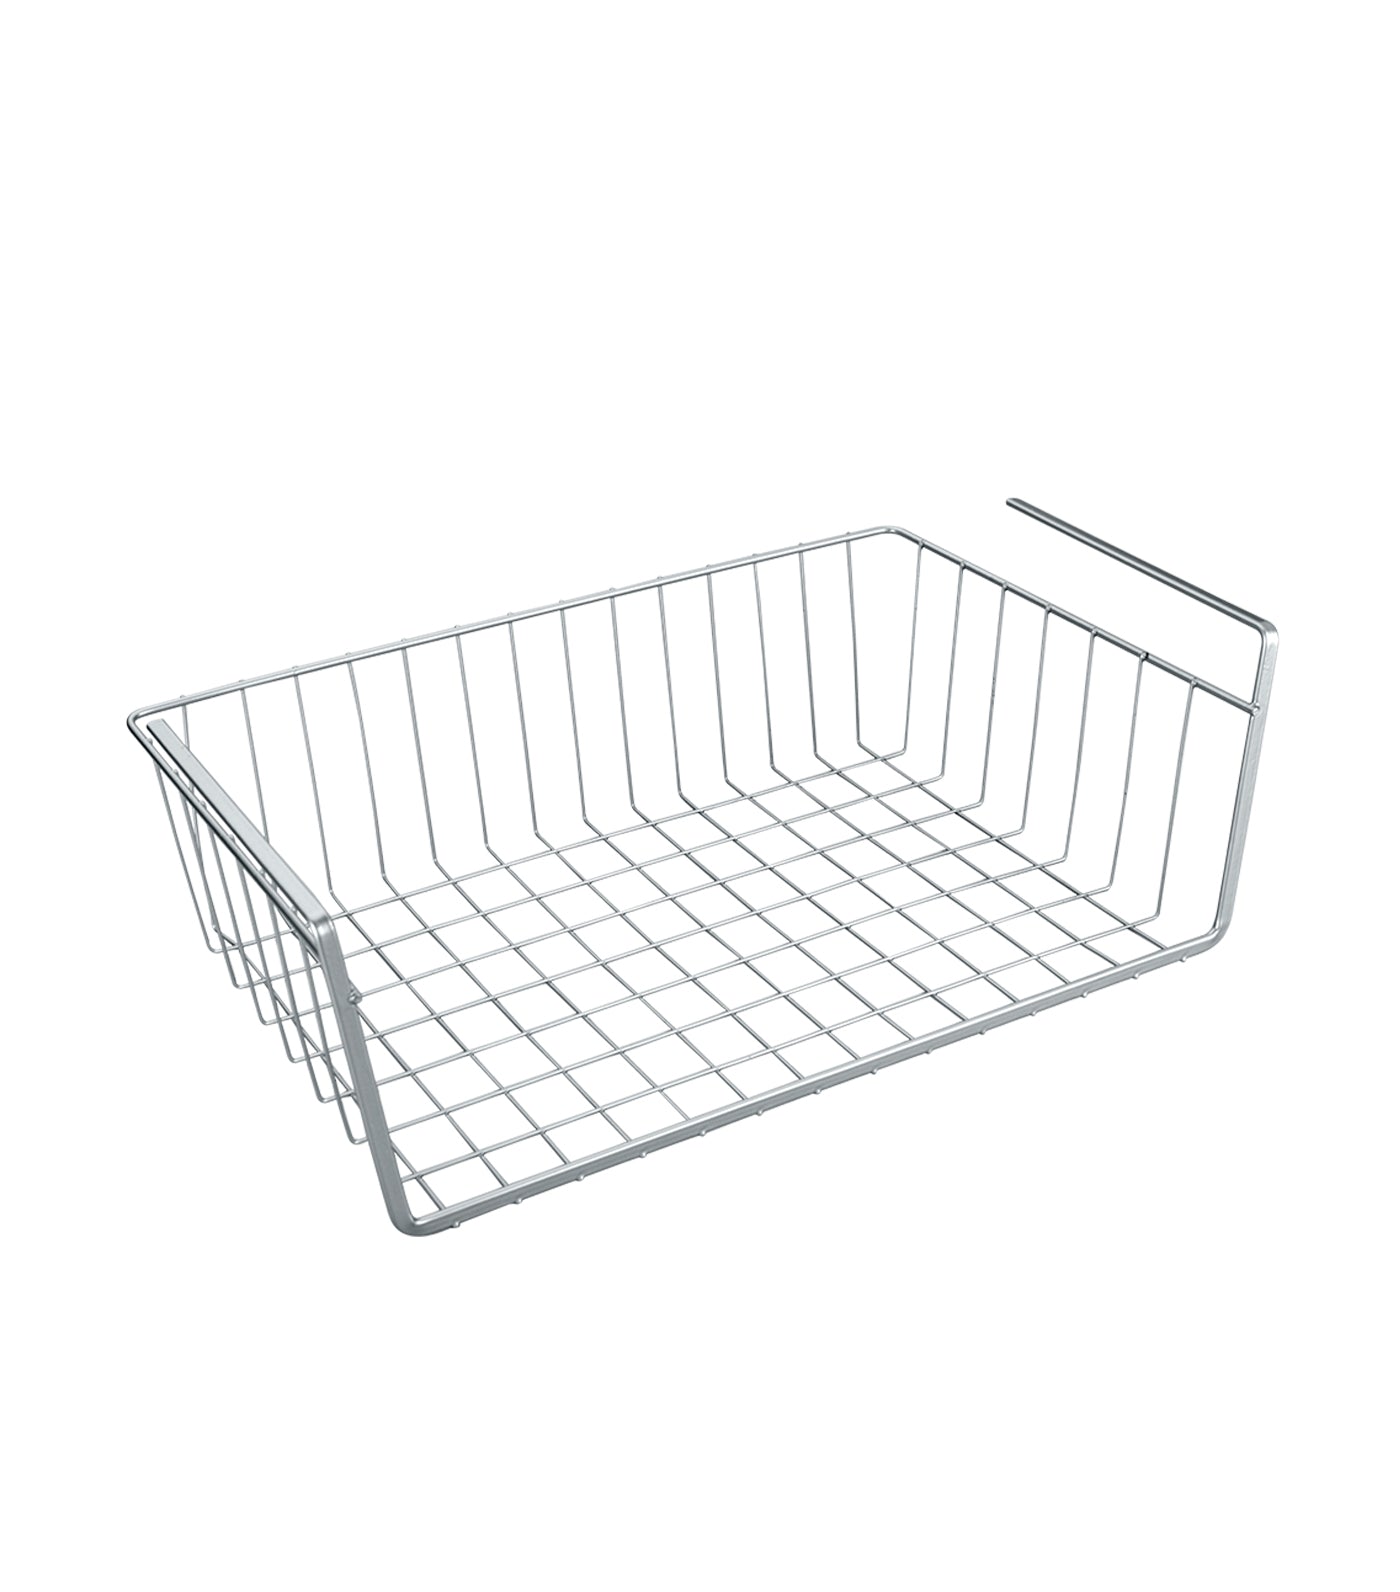 MakeRoom Kanguro Undershelf Basket